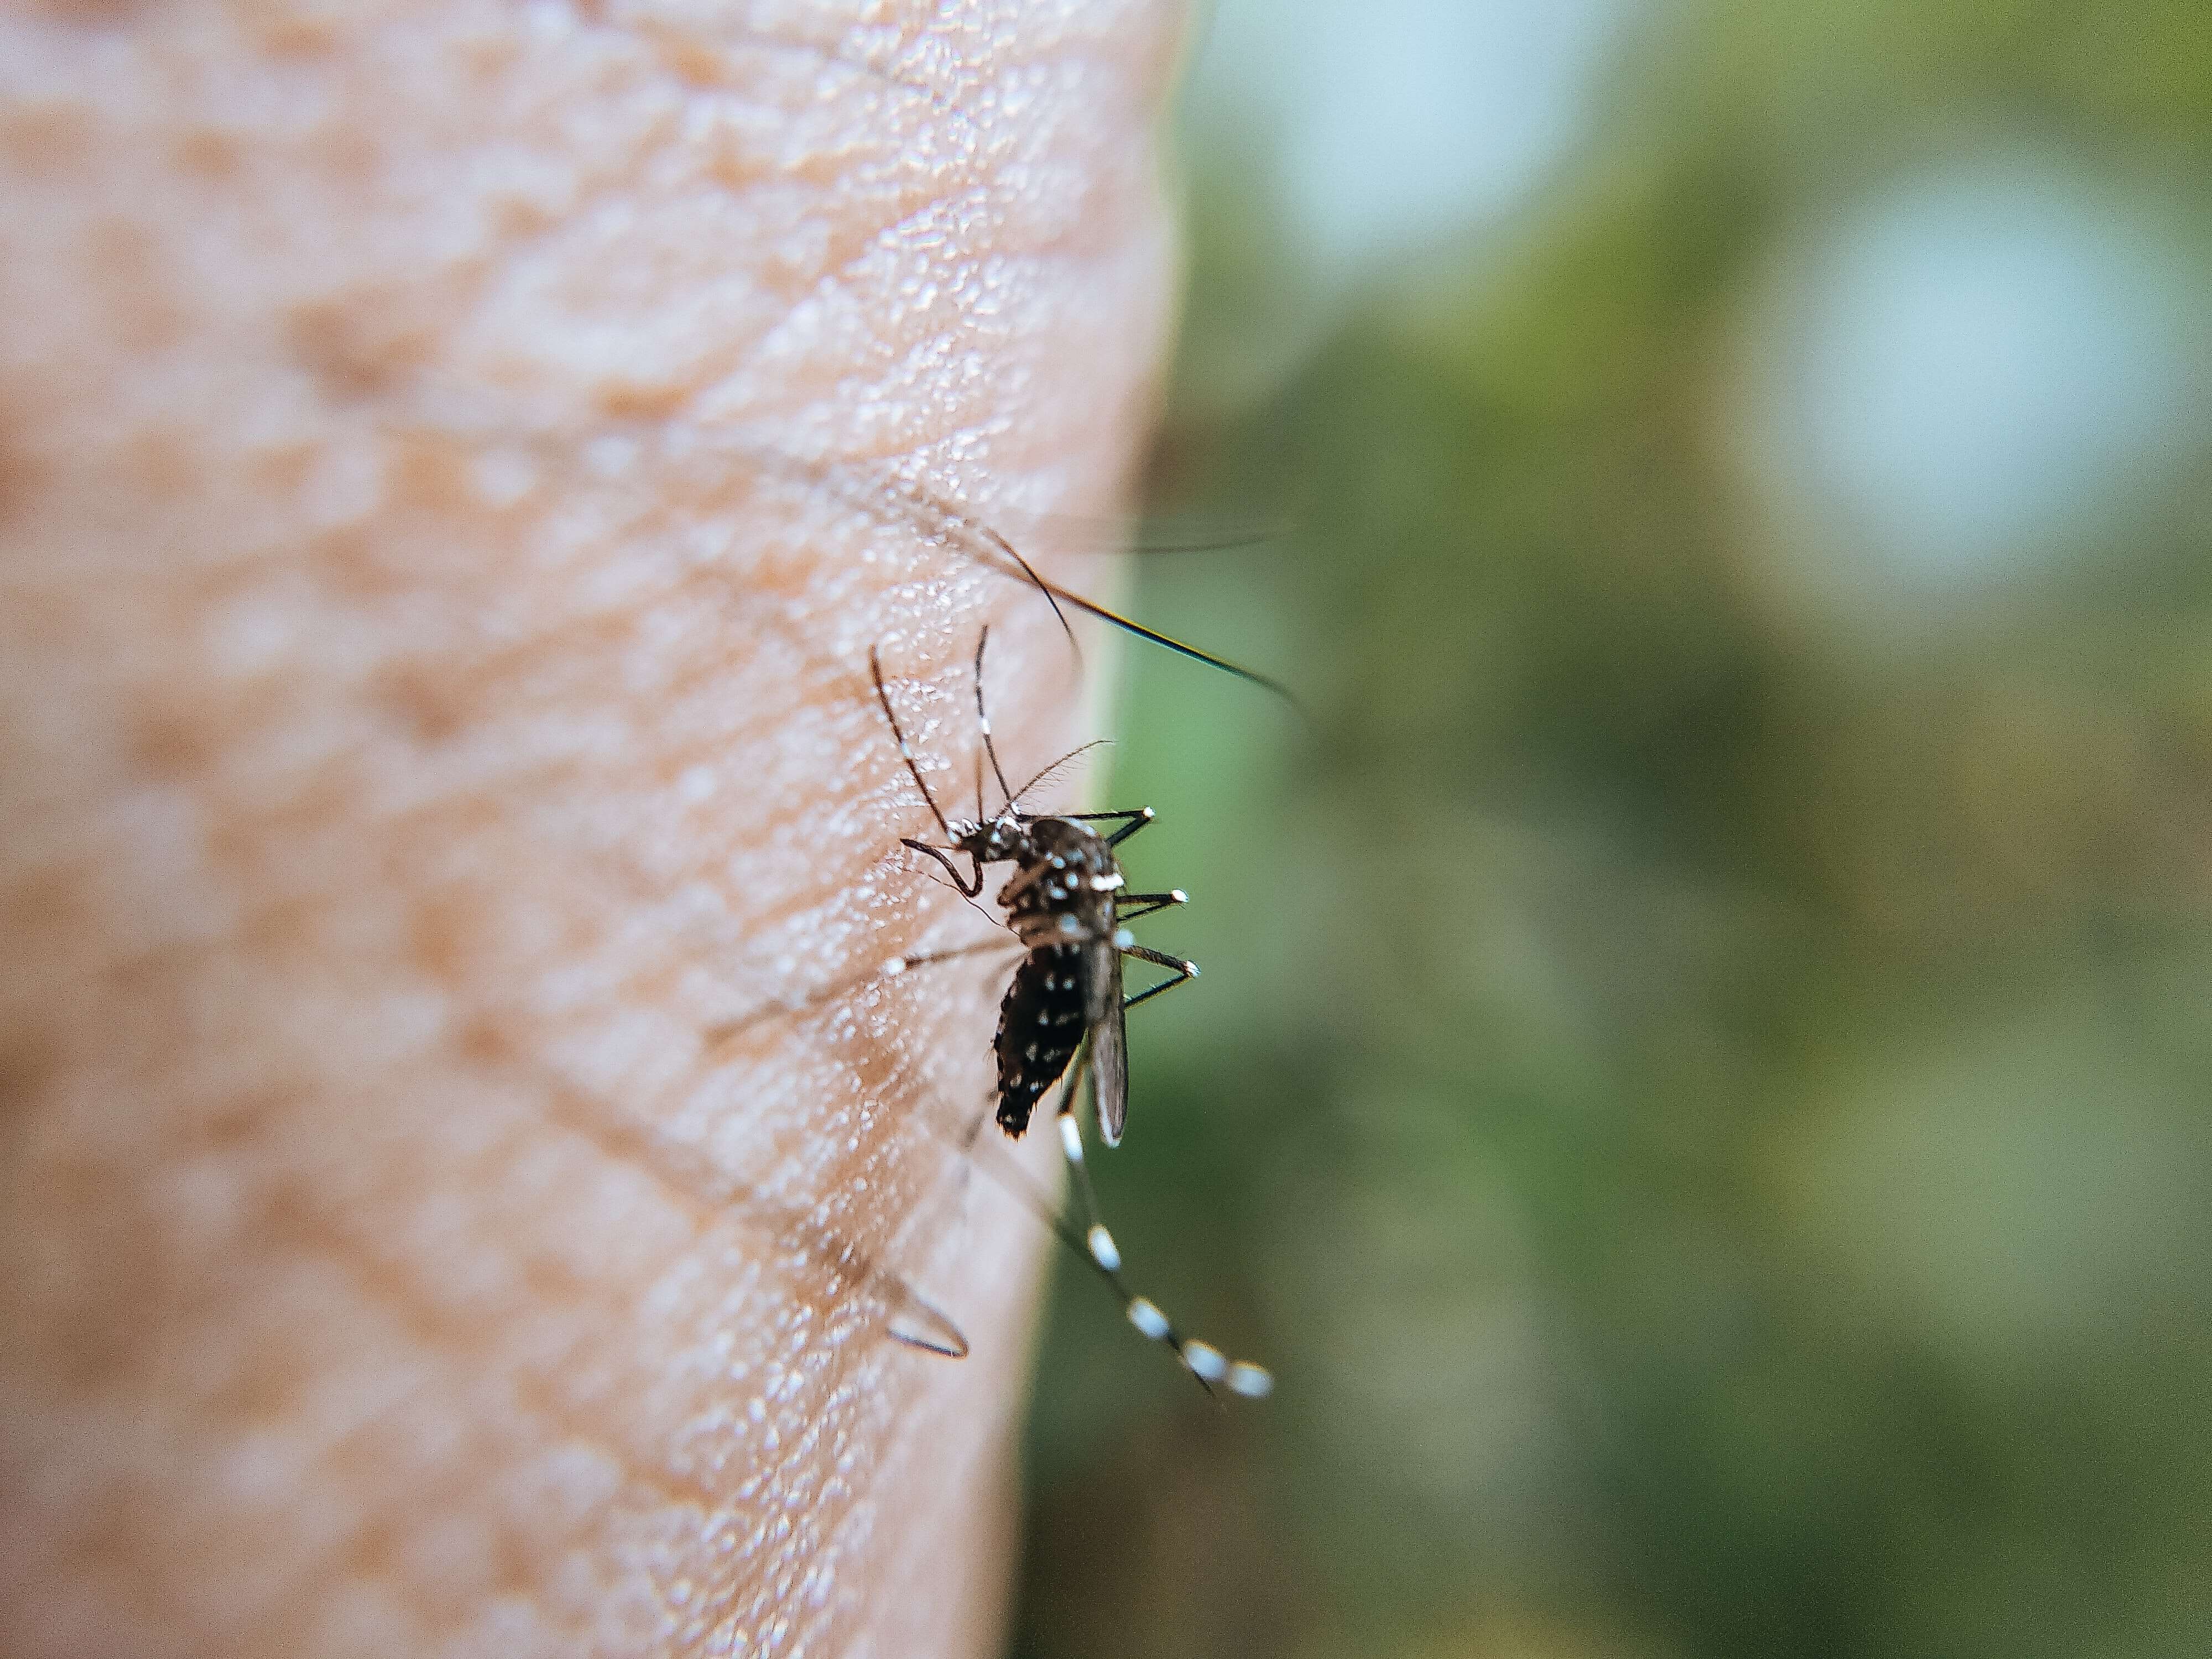 Mosquito Borne Viruses